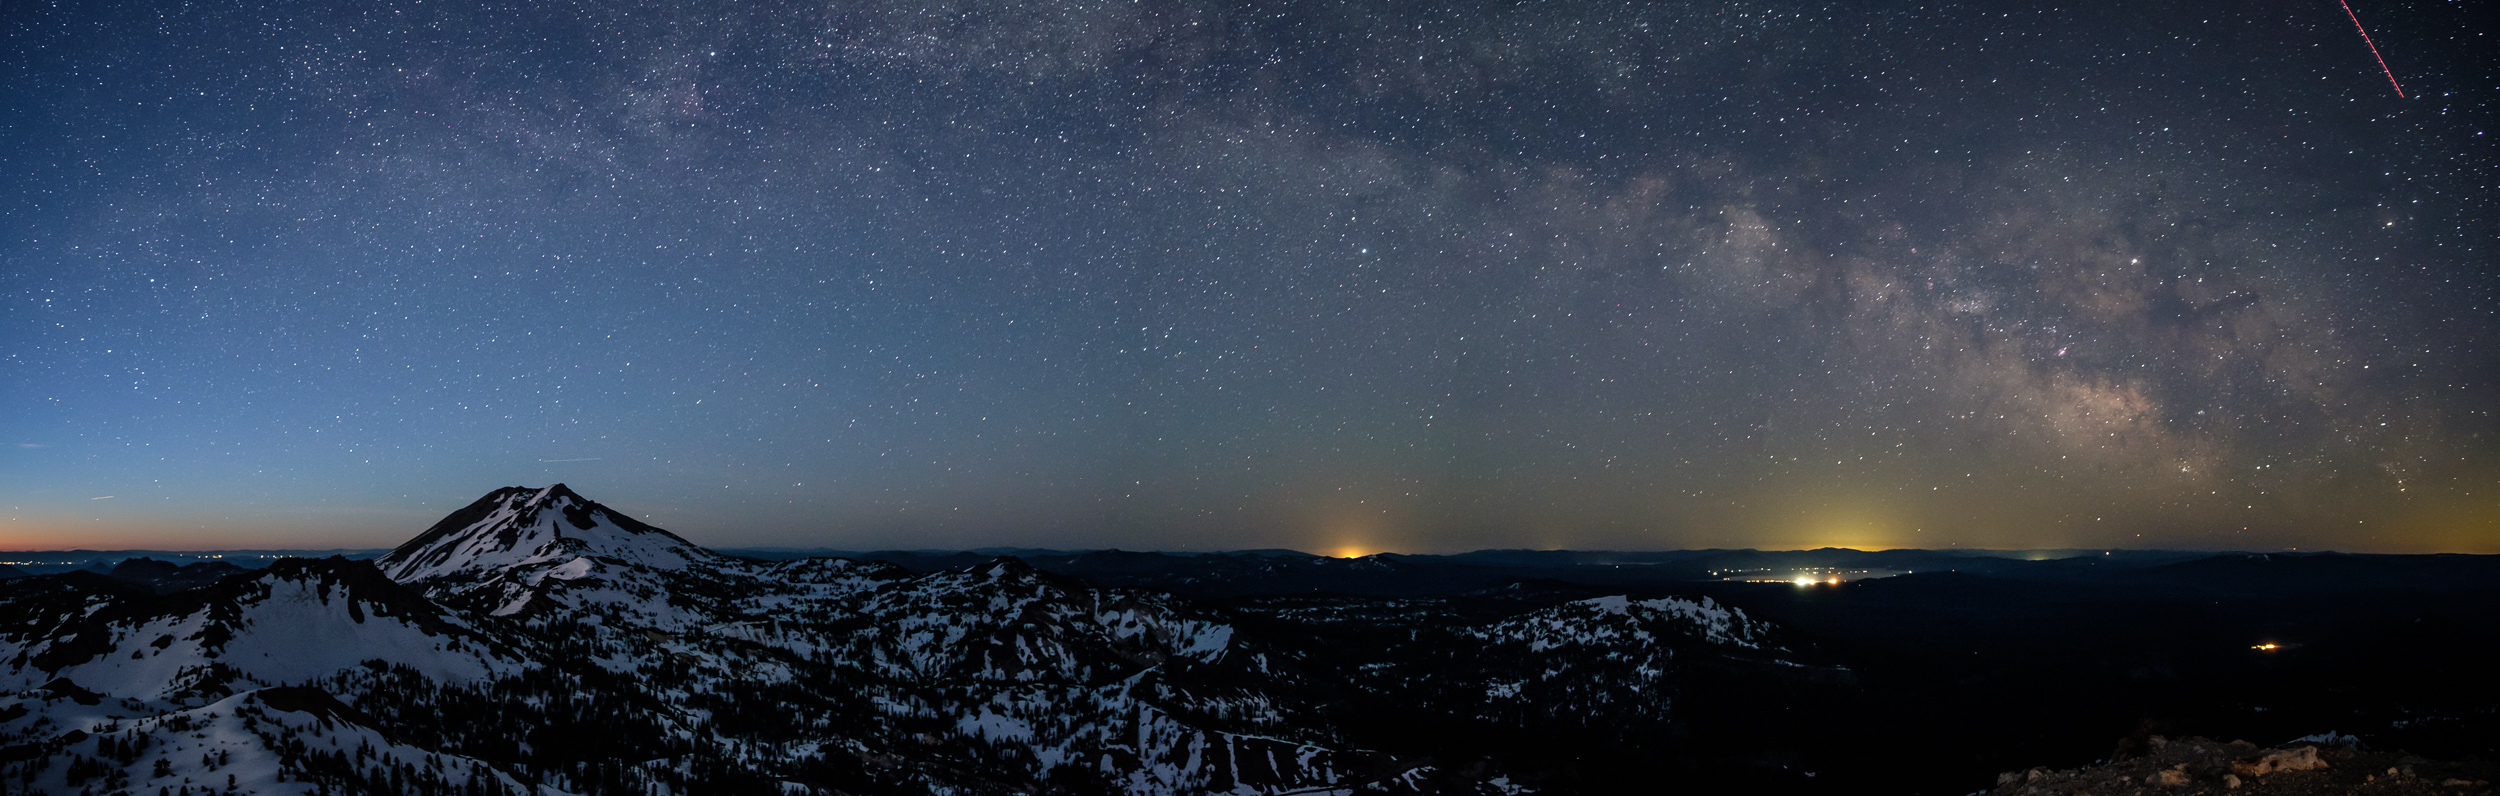  The Milky Way arcs across the sky above Lassen Peak. Lassen Volcanic National Park, California.&nbsp; 